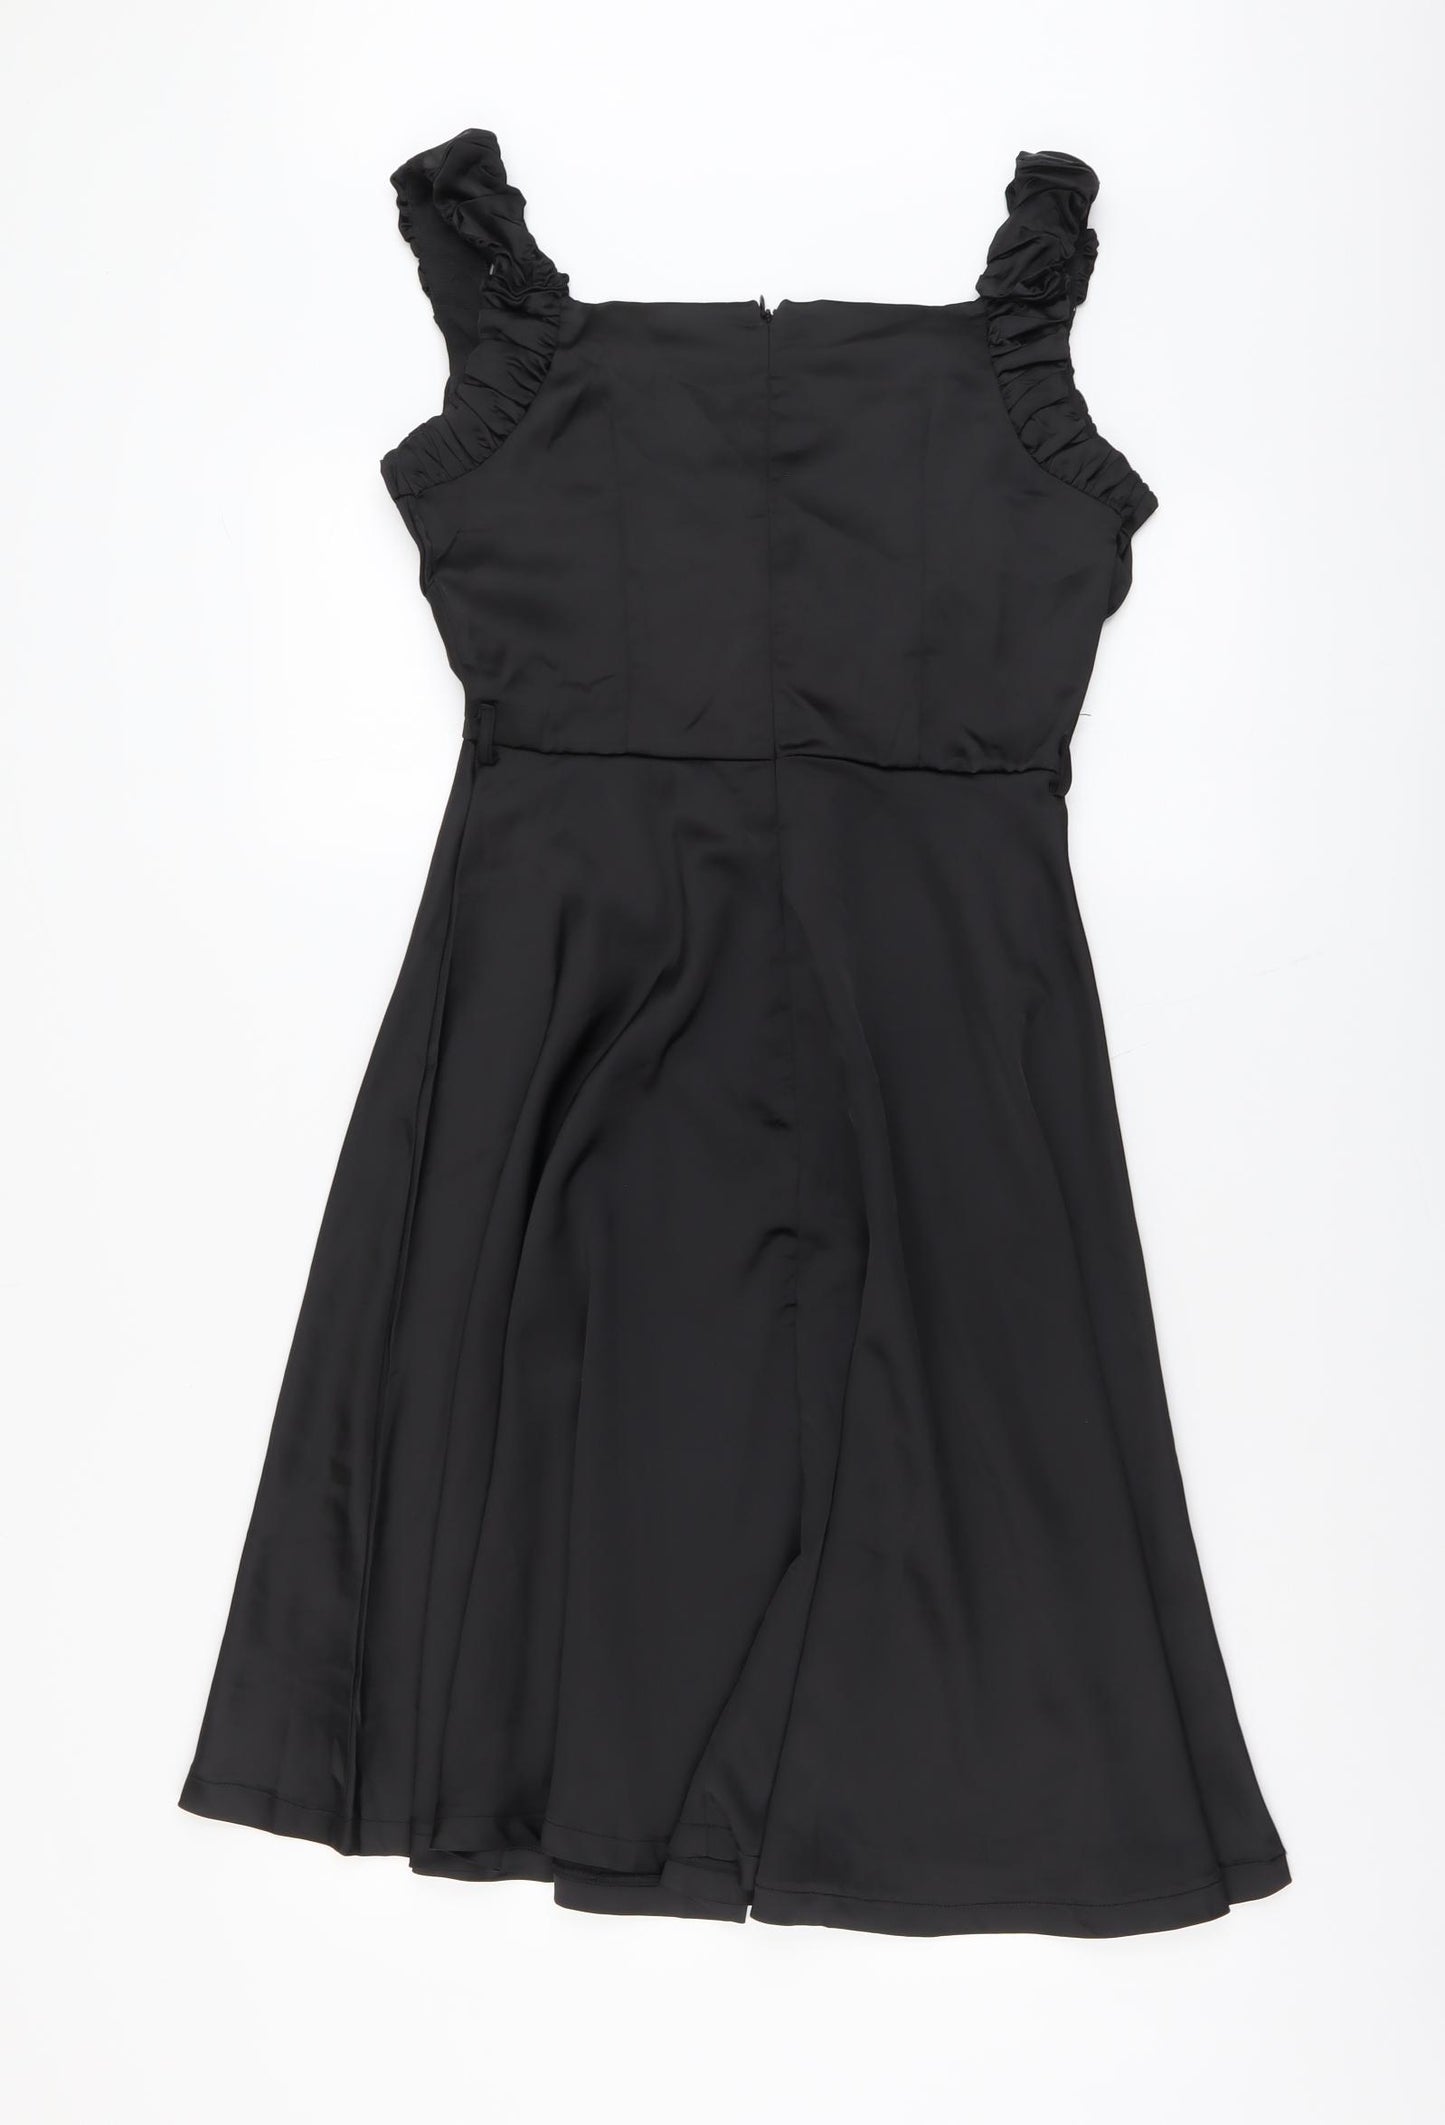 Lindy Bop Womens Black Polyester Skater Dress Size 10 Sweetheart Zip